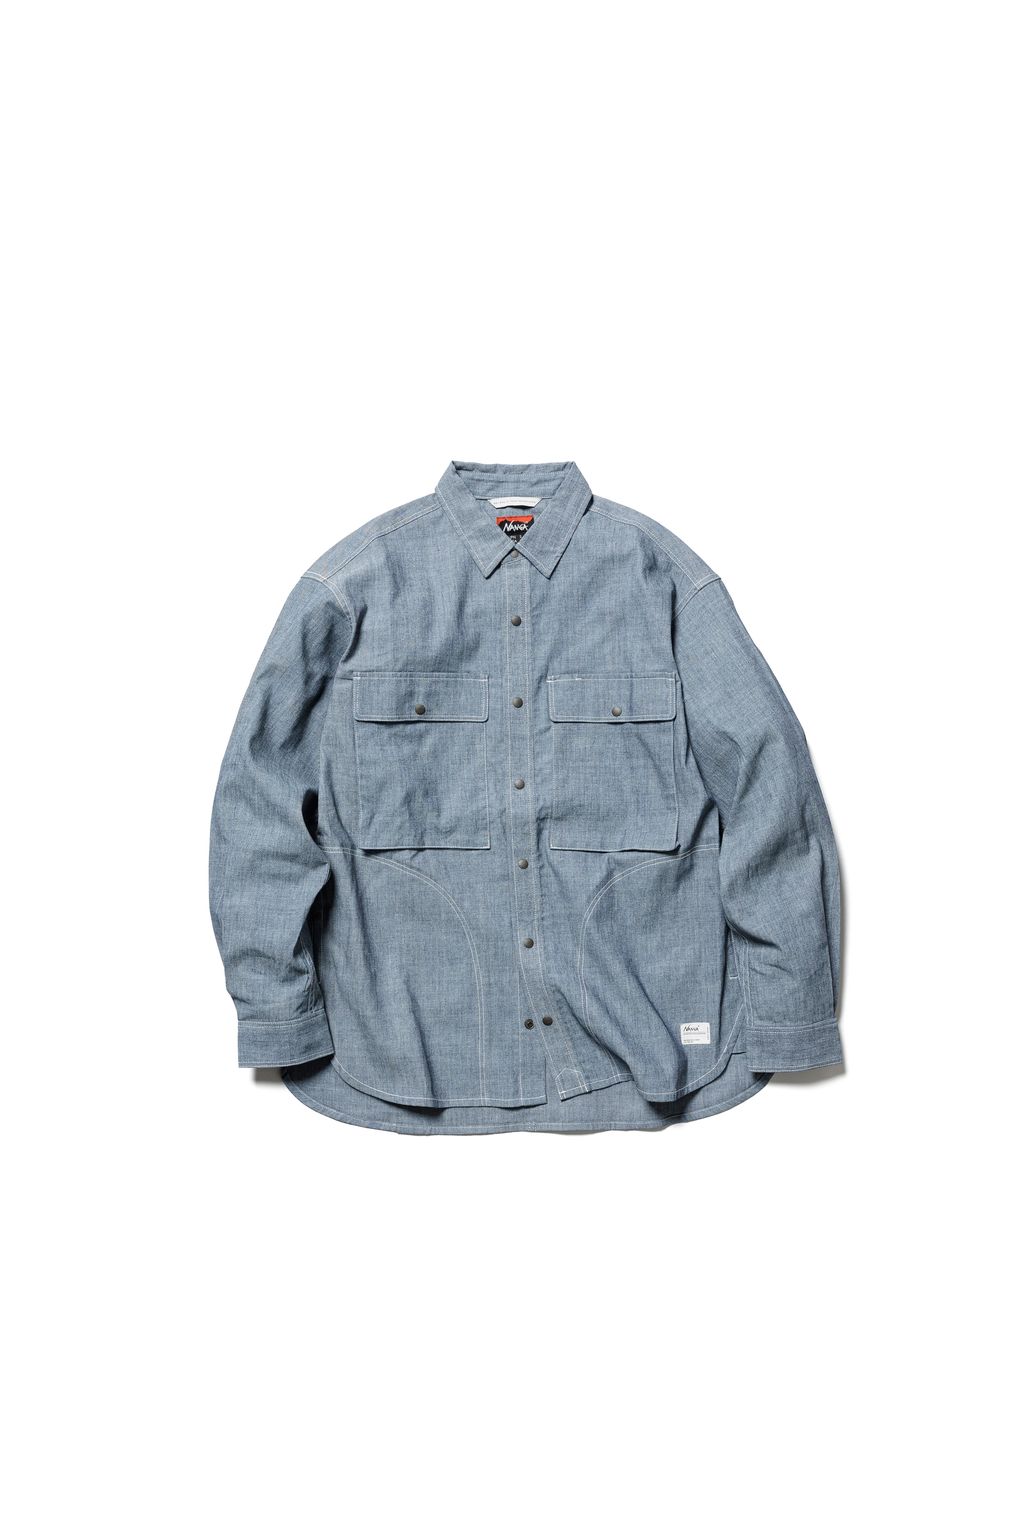 NANGA 12033 Takibi Chambray Field Shirt – WHITEROCK